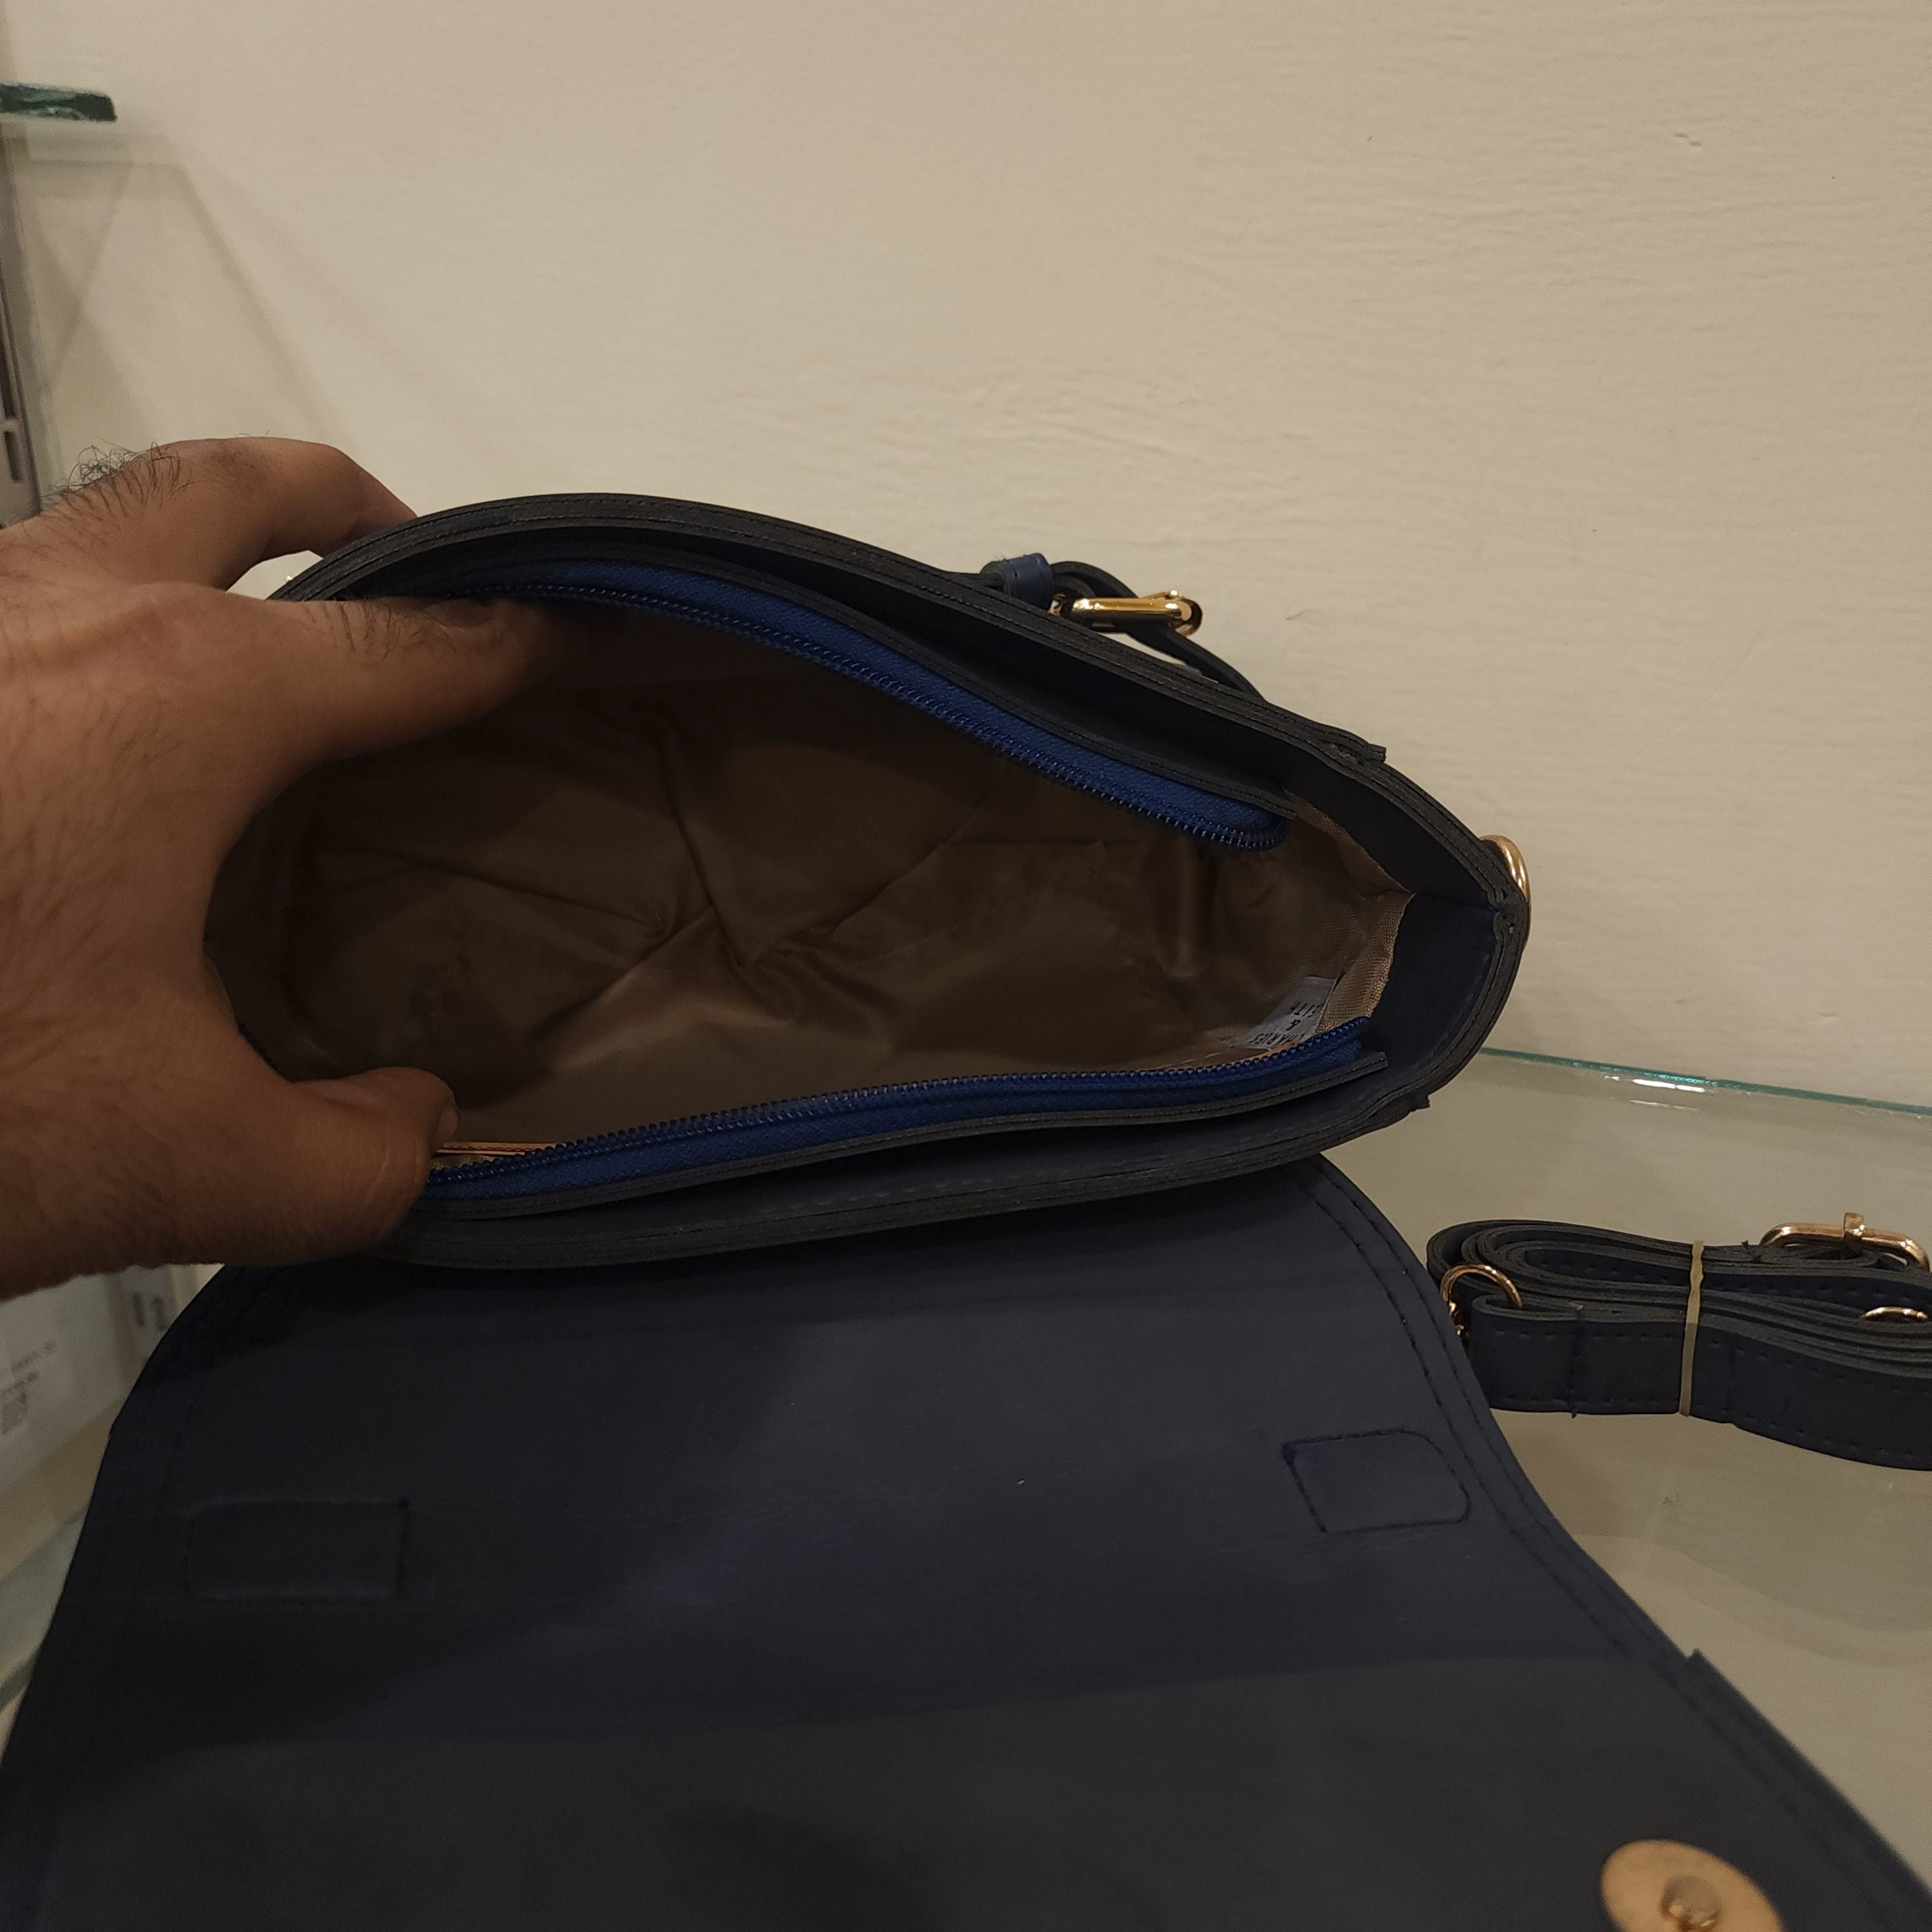 Navy Crossbody Bag - Maha fashions -  Handbag